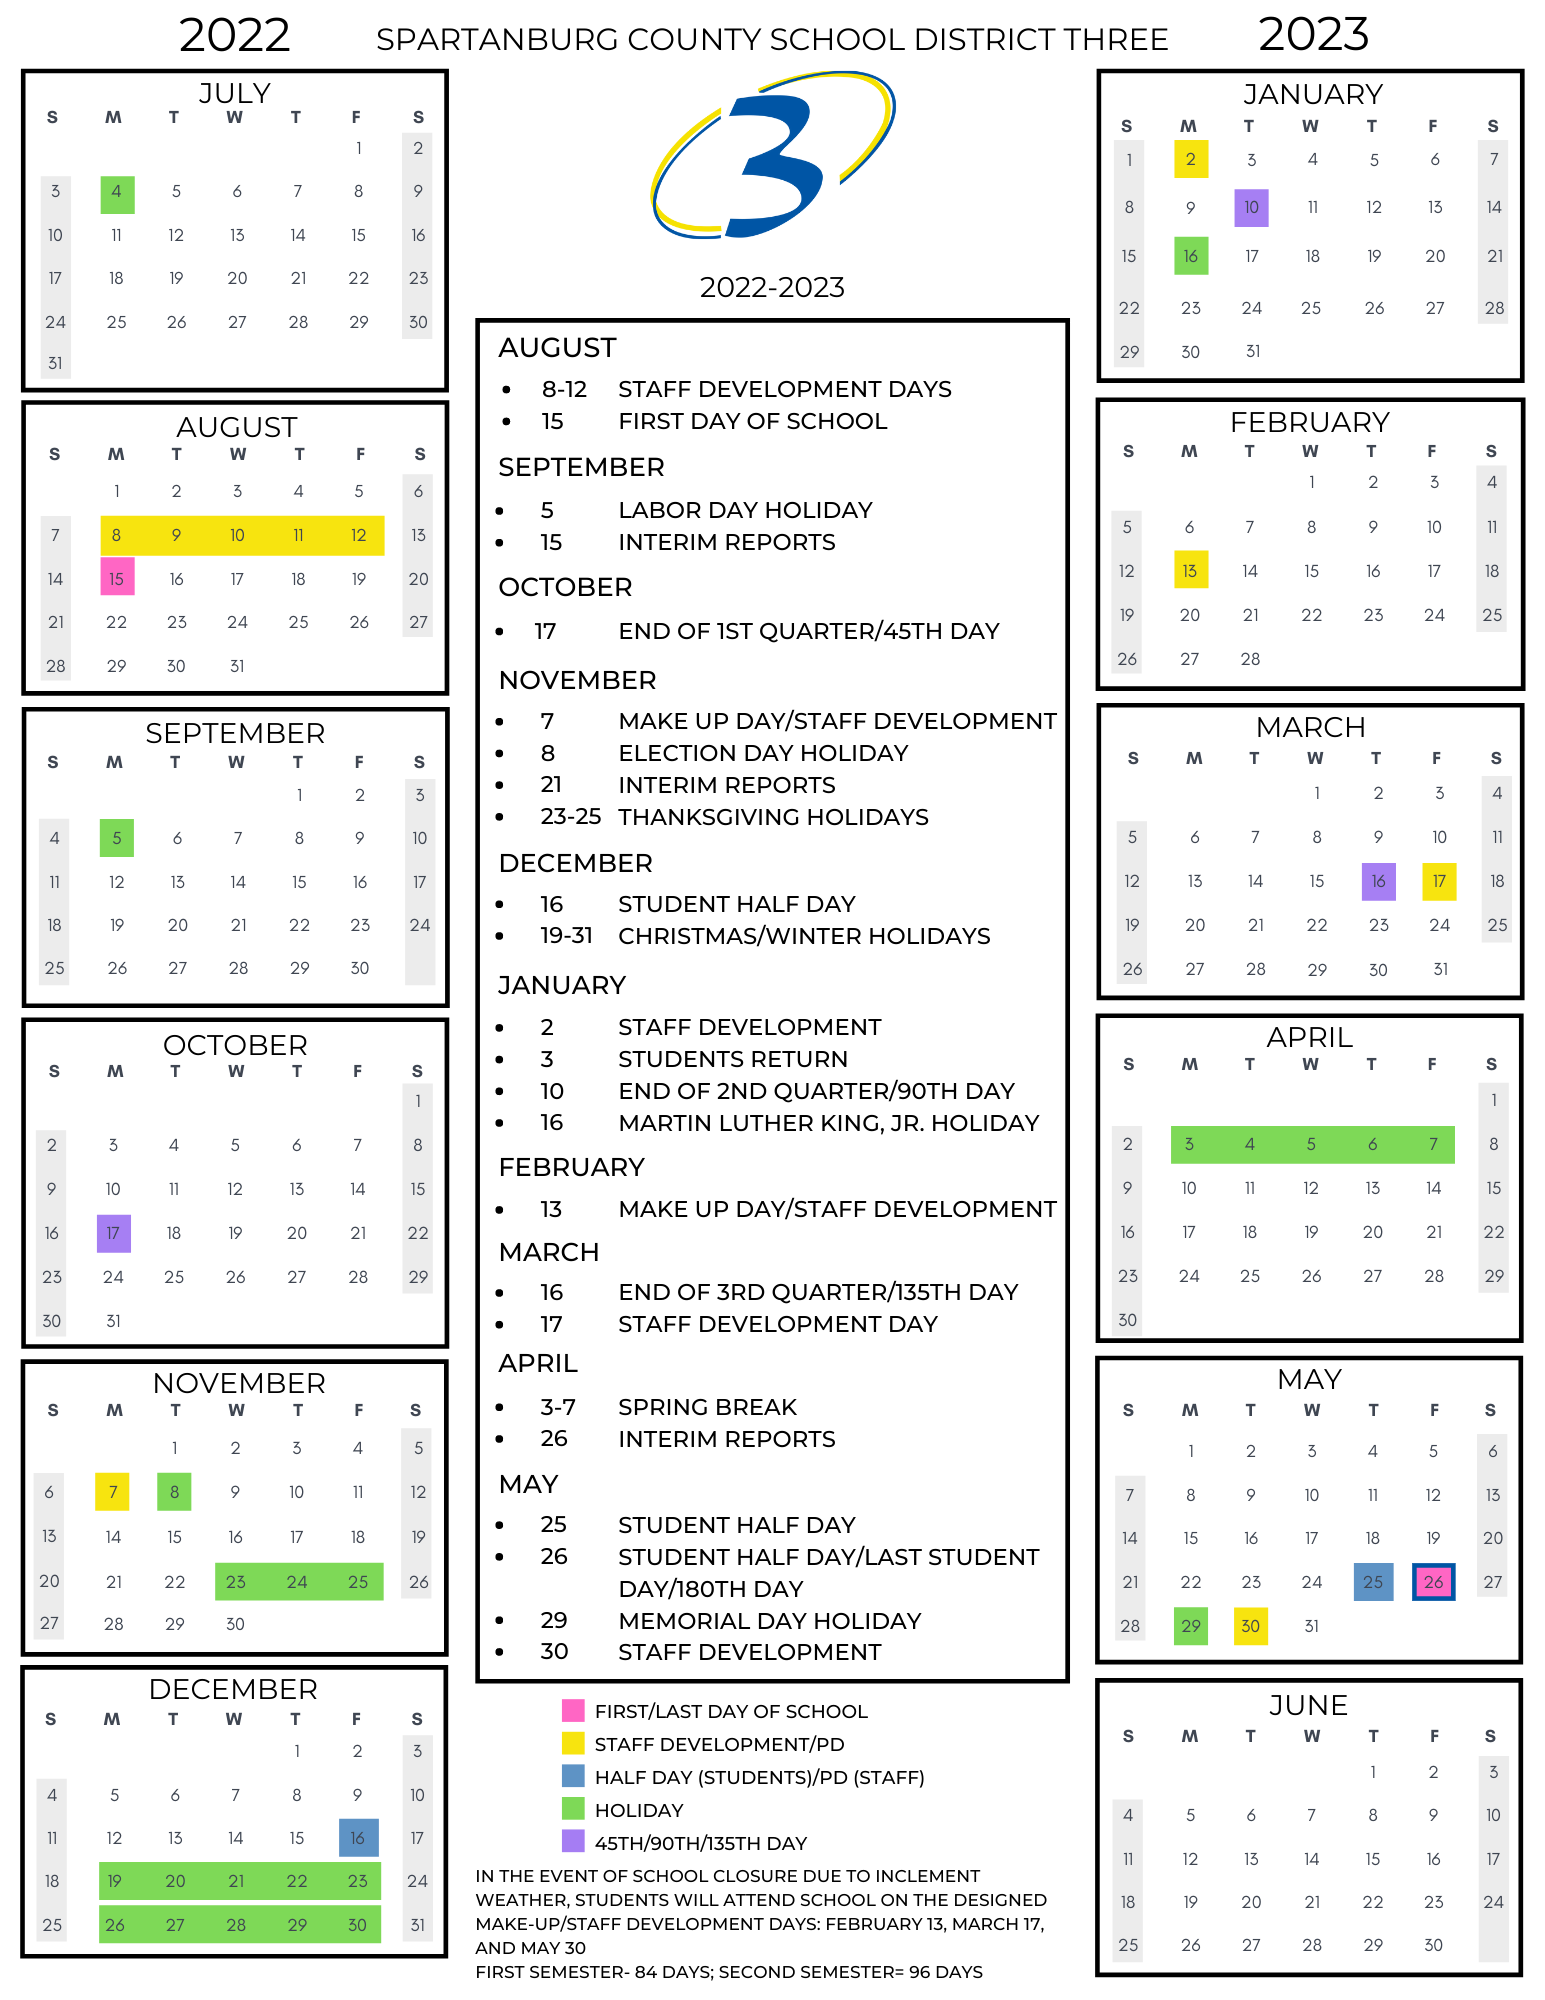 for an ada friendly version of this calendar, please email amyles@spartanburg3.org